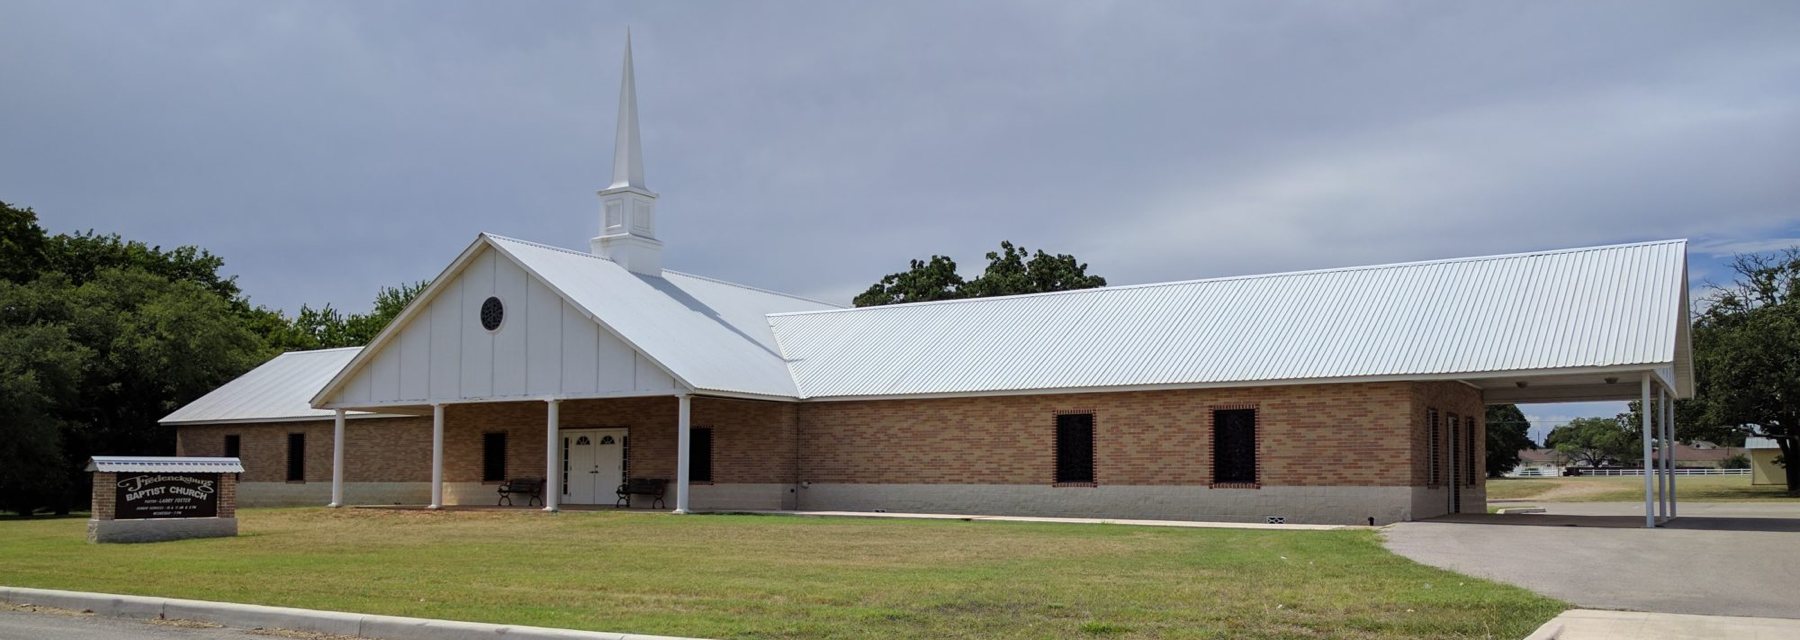 fredericksburg-baptist-church-fredericksburg-texas